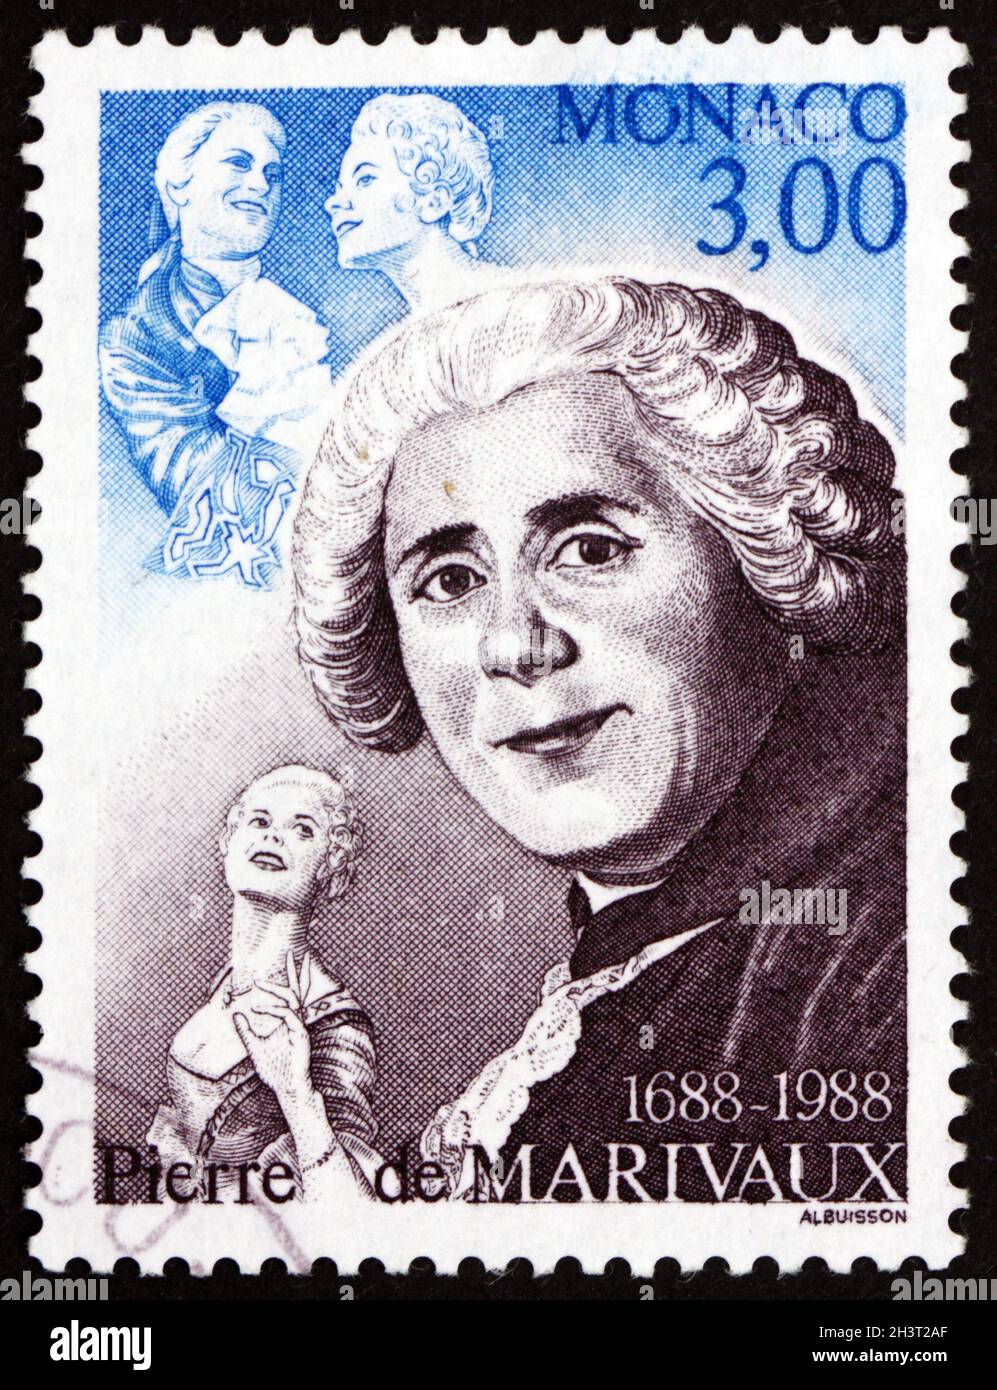 MONACO - CIRCA 1988: a stamp printed in Monaco shows Pierre Carlet de Chamblain de Marivaux (1688-1763), French playwright and novelist, circa 1988 Stock Photo